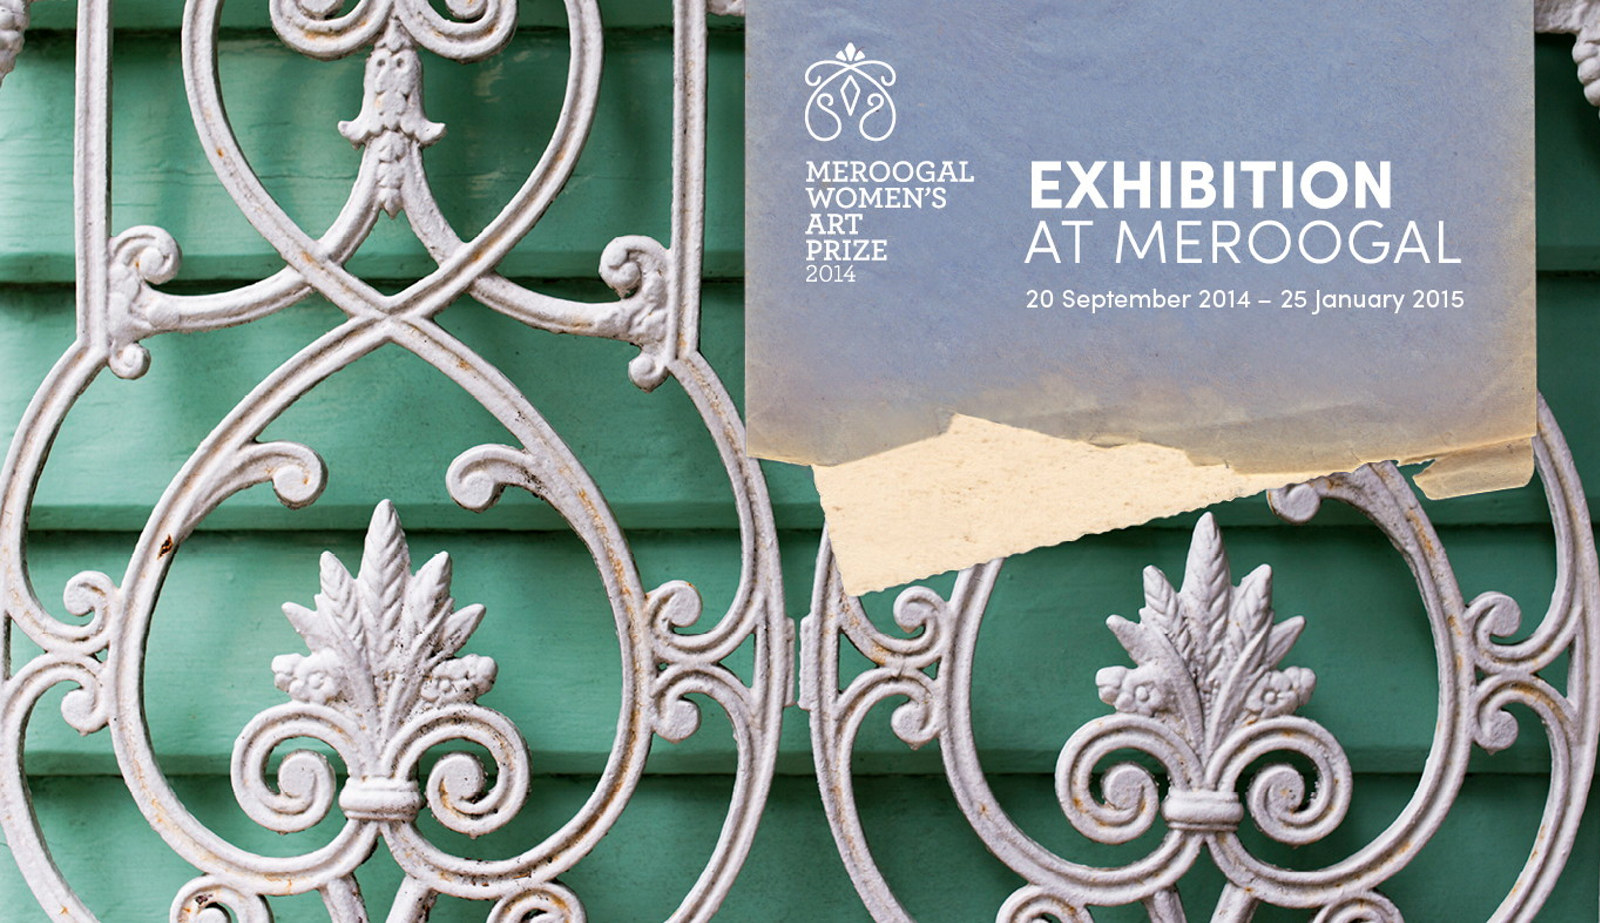 Meroogal Women's Art Prize 2014 exhibition on now